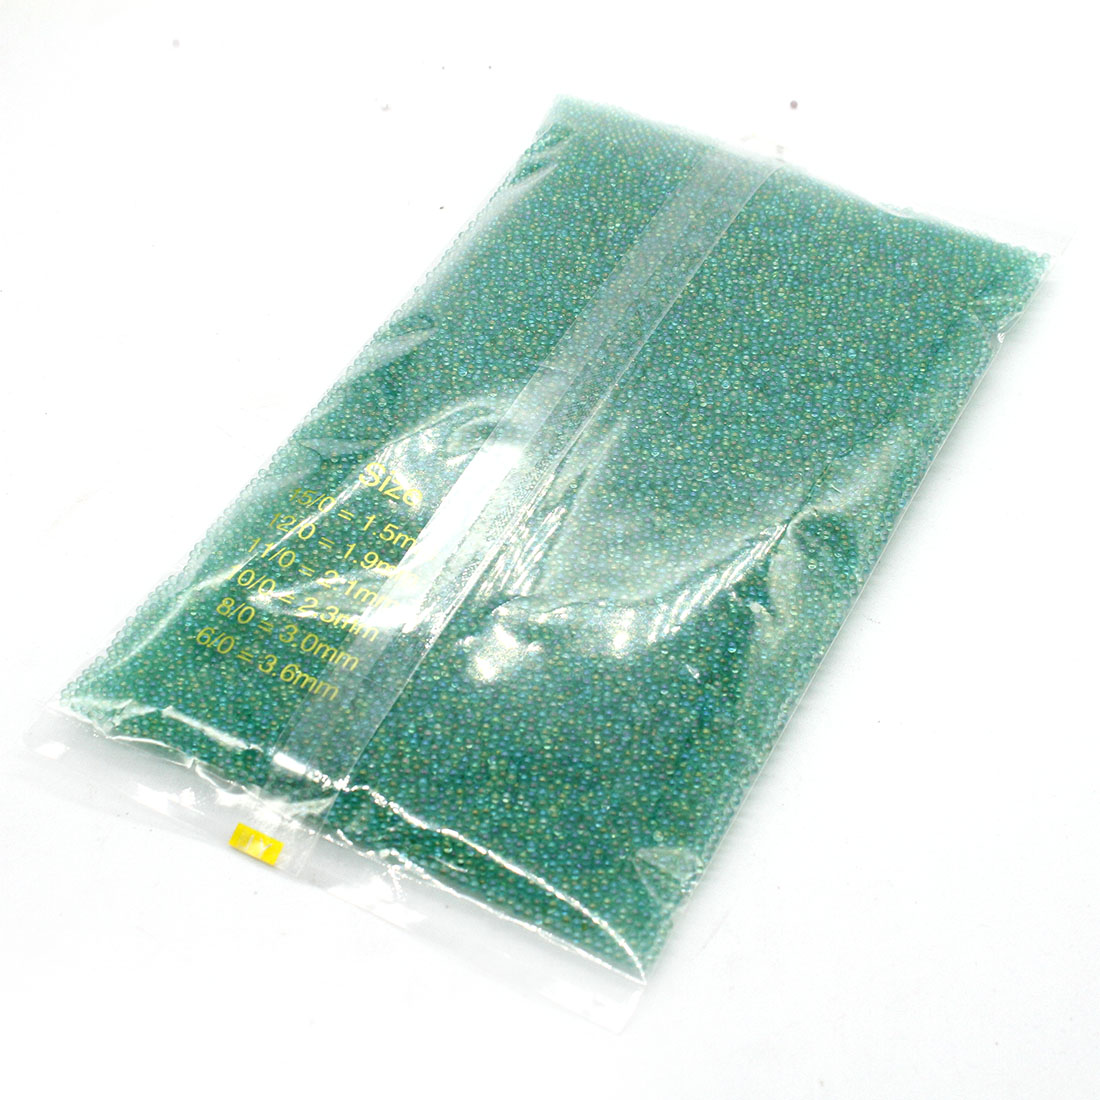 Green, 0.8-1 mm